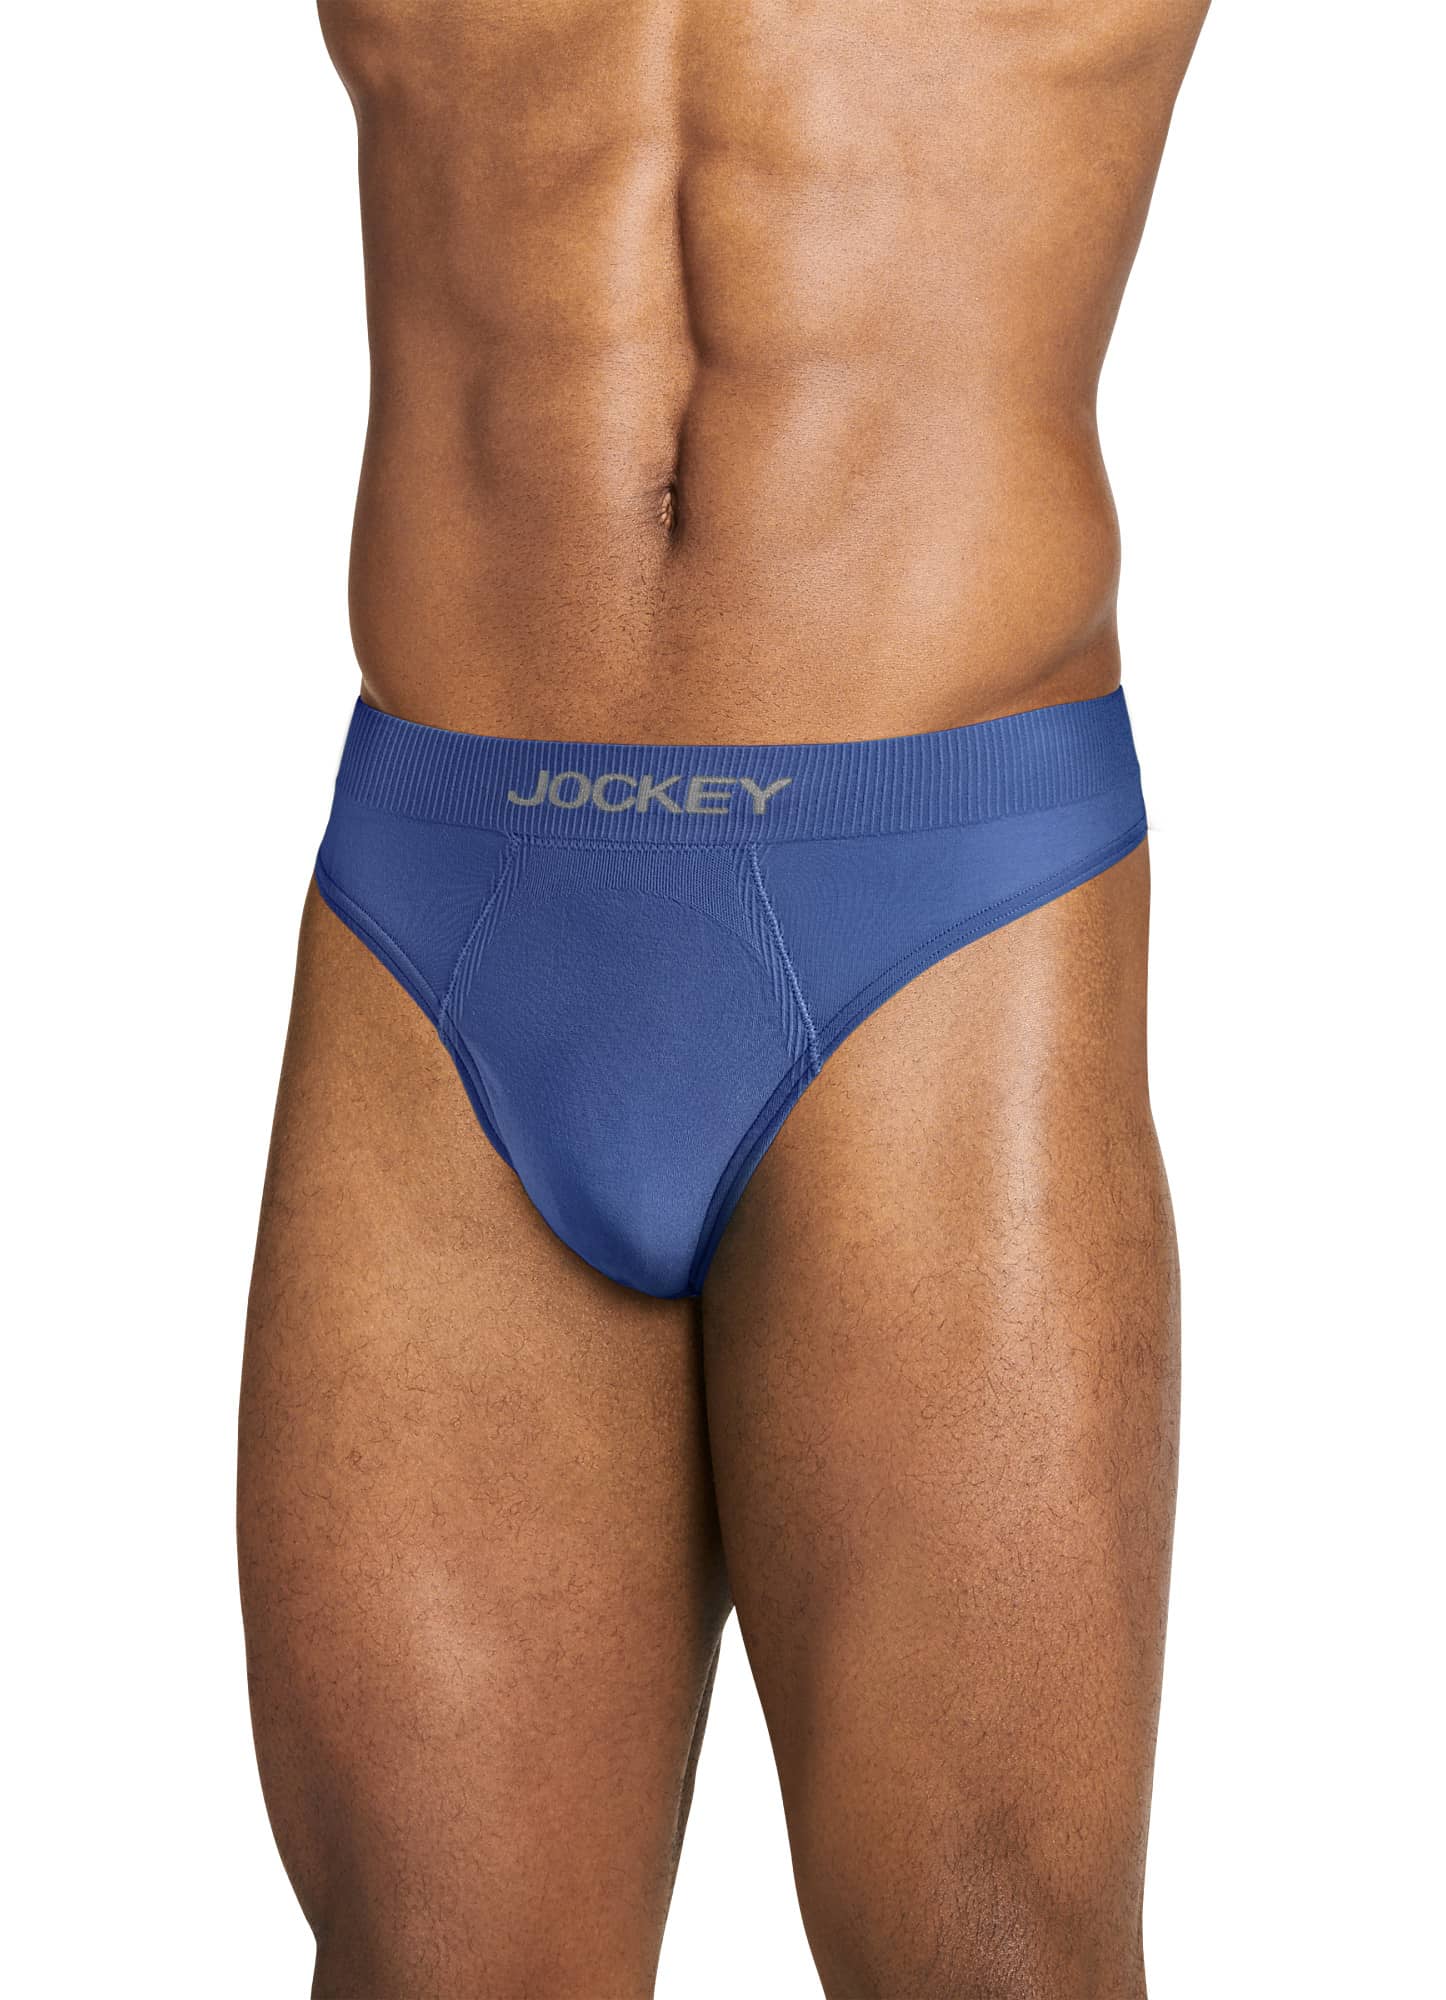 Buy Jockey Men's Seamfree Thong Underwear at Ubuy Italy